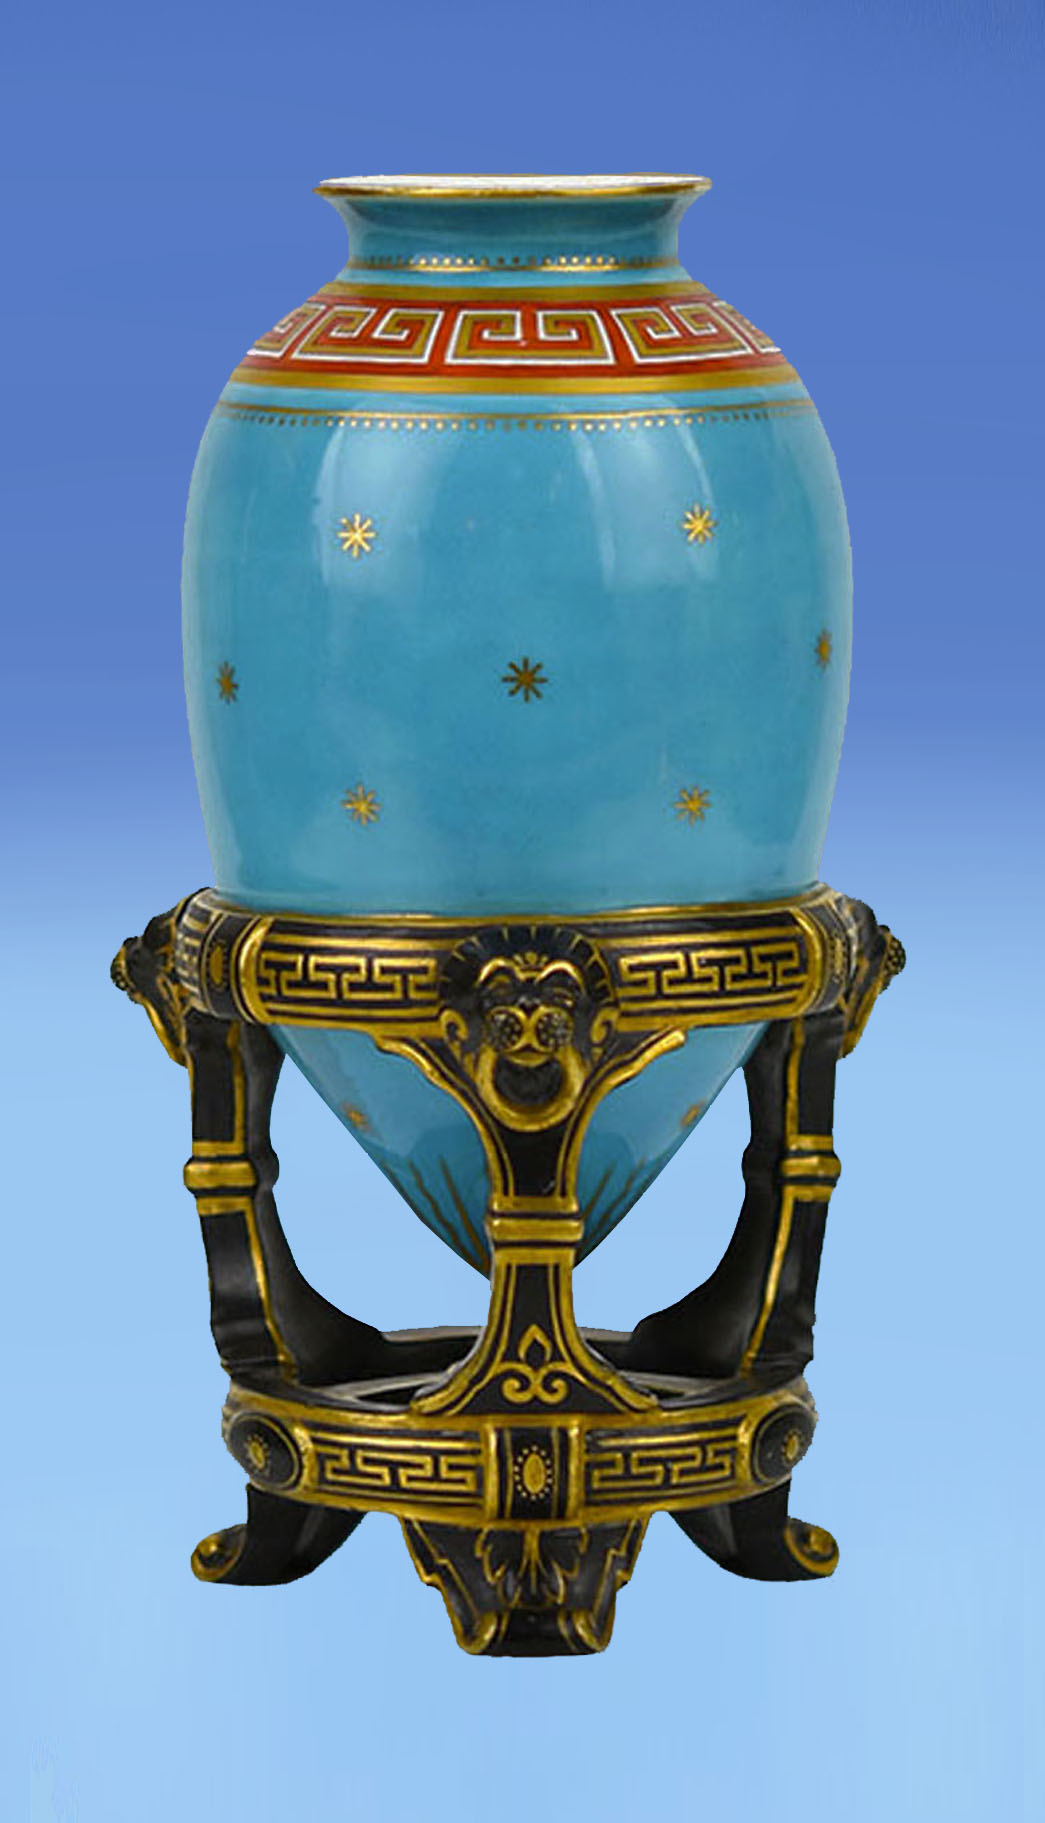 Minton Porcelain Vase designed by Christopher Dresser, London International Exhibition 1862